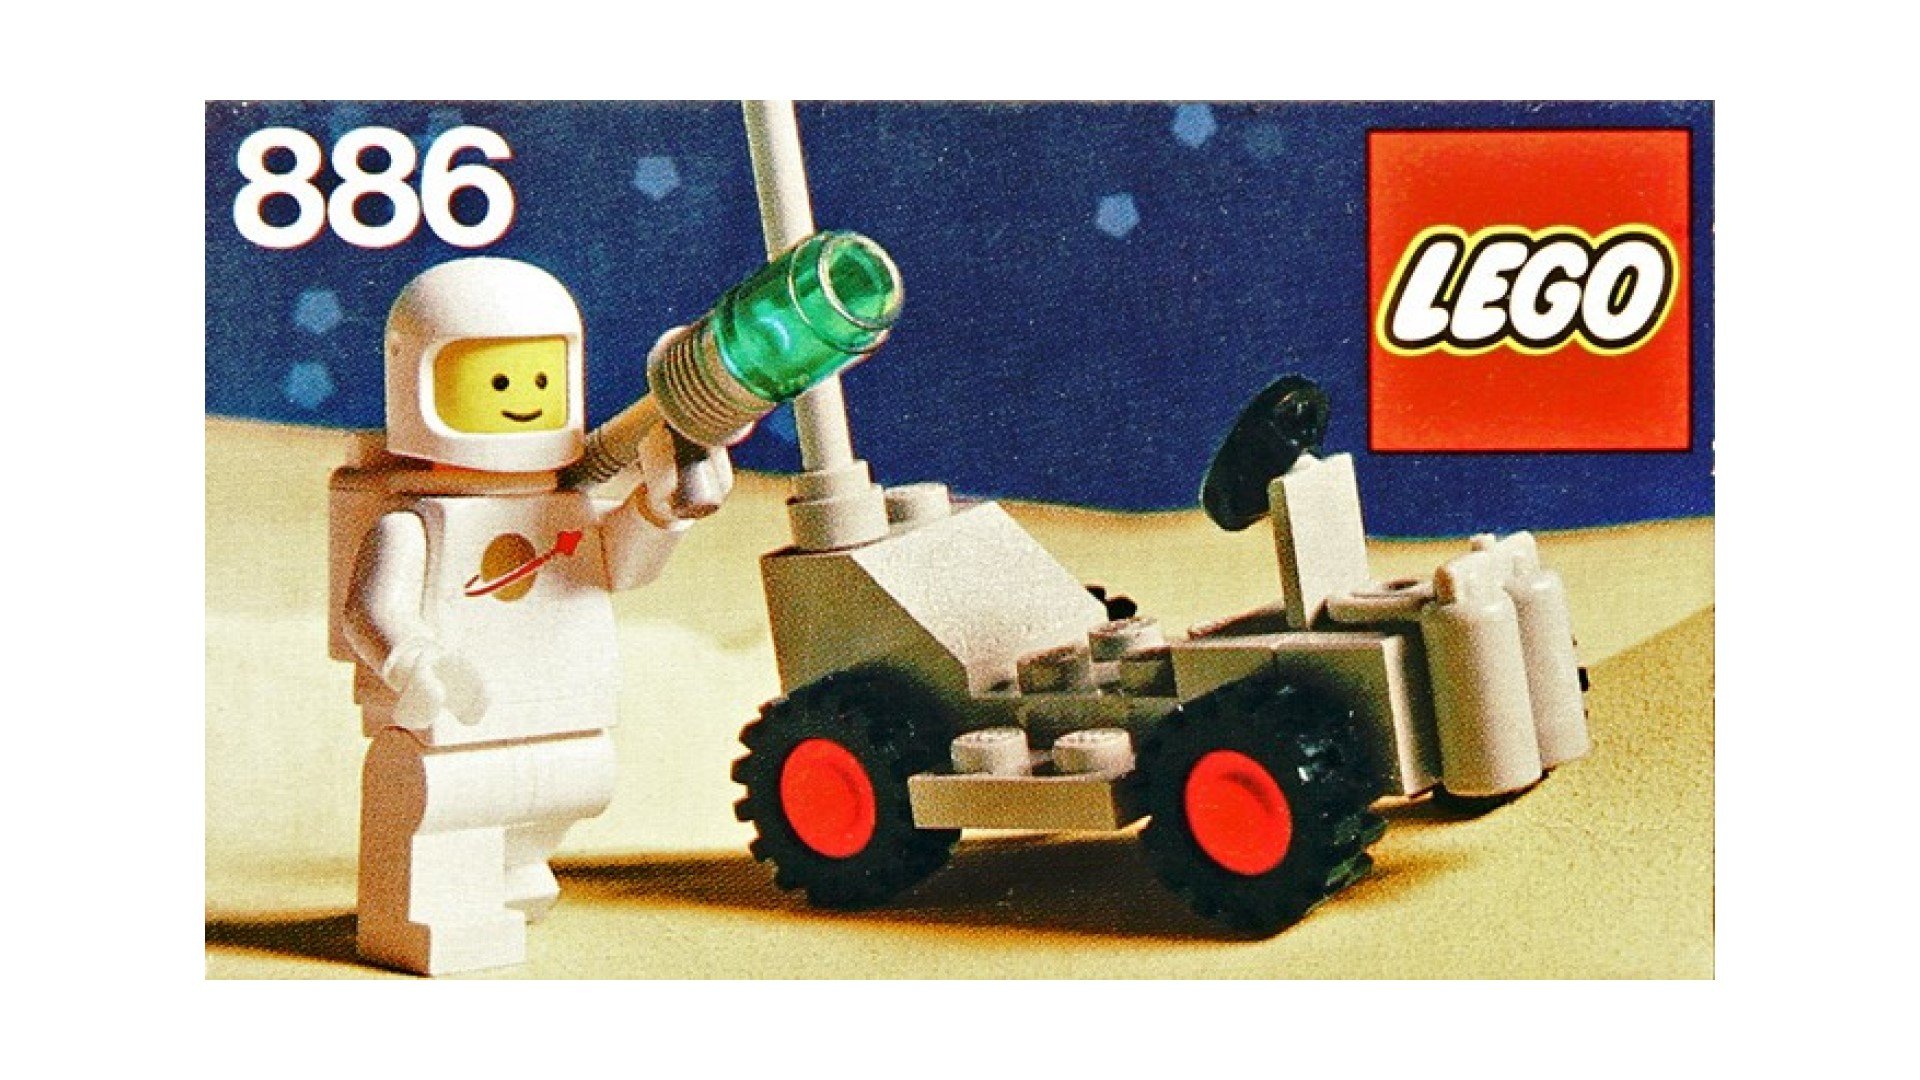 Best Lego sets - the Lego moon buggy set.